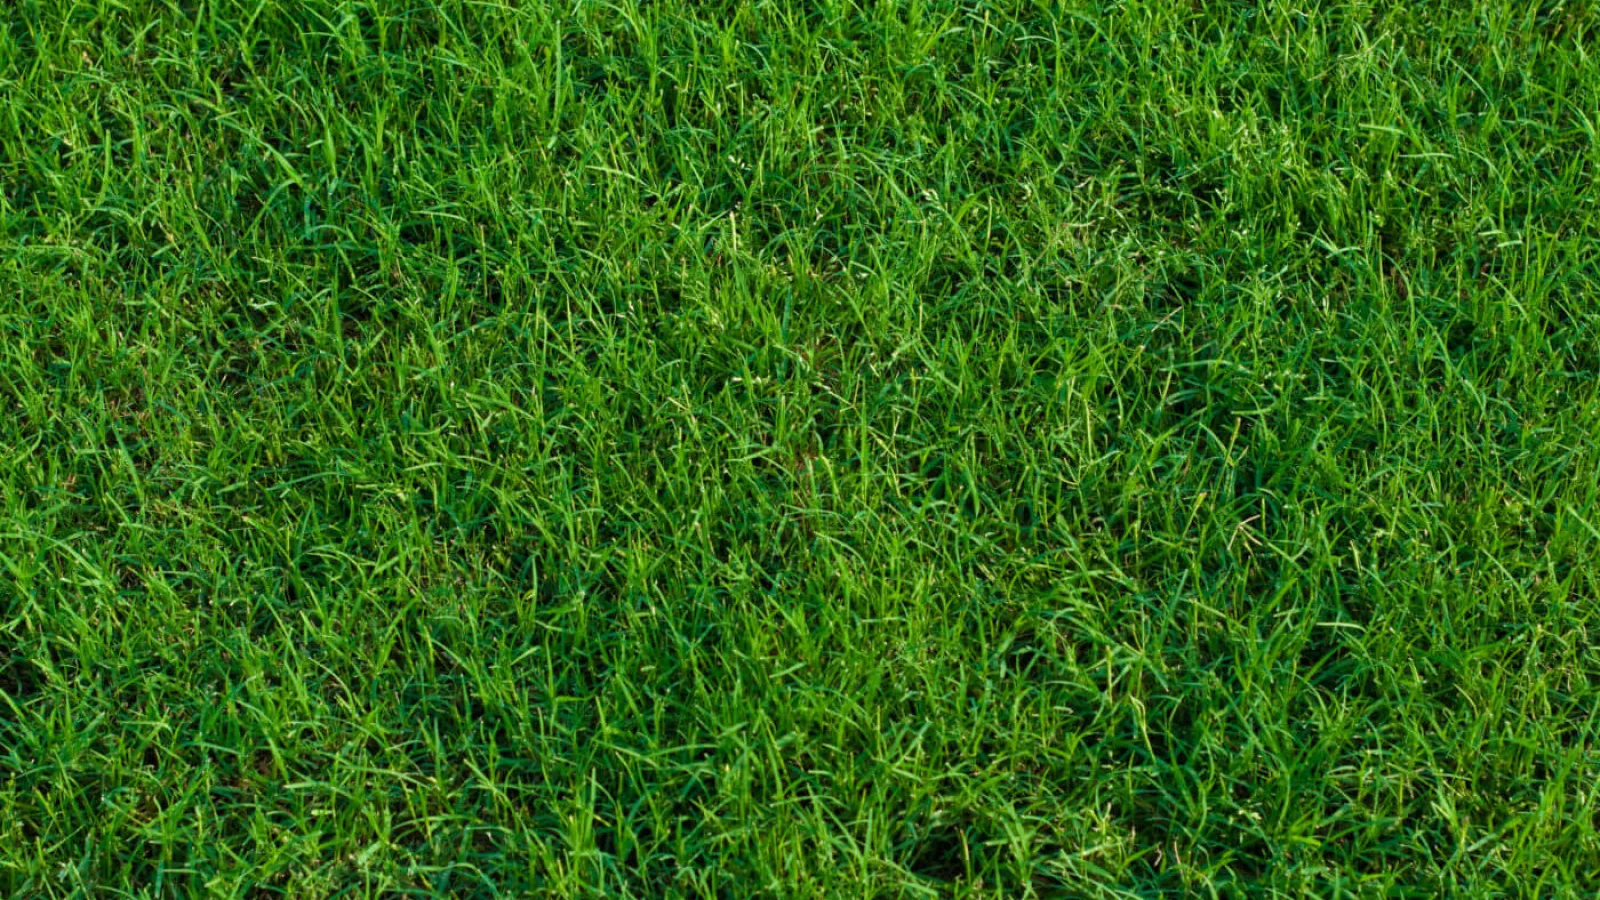 a close-up of some grass